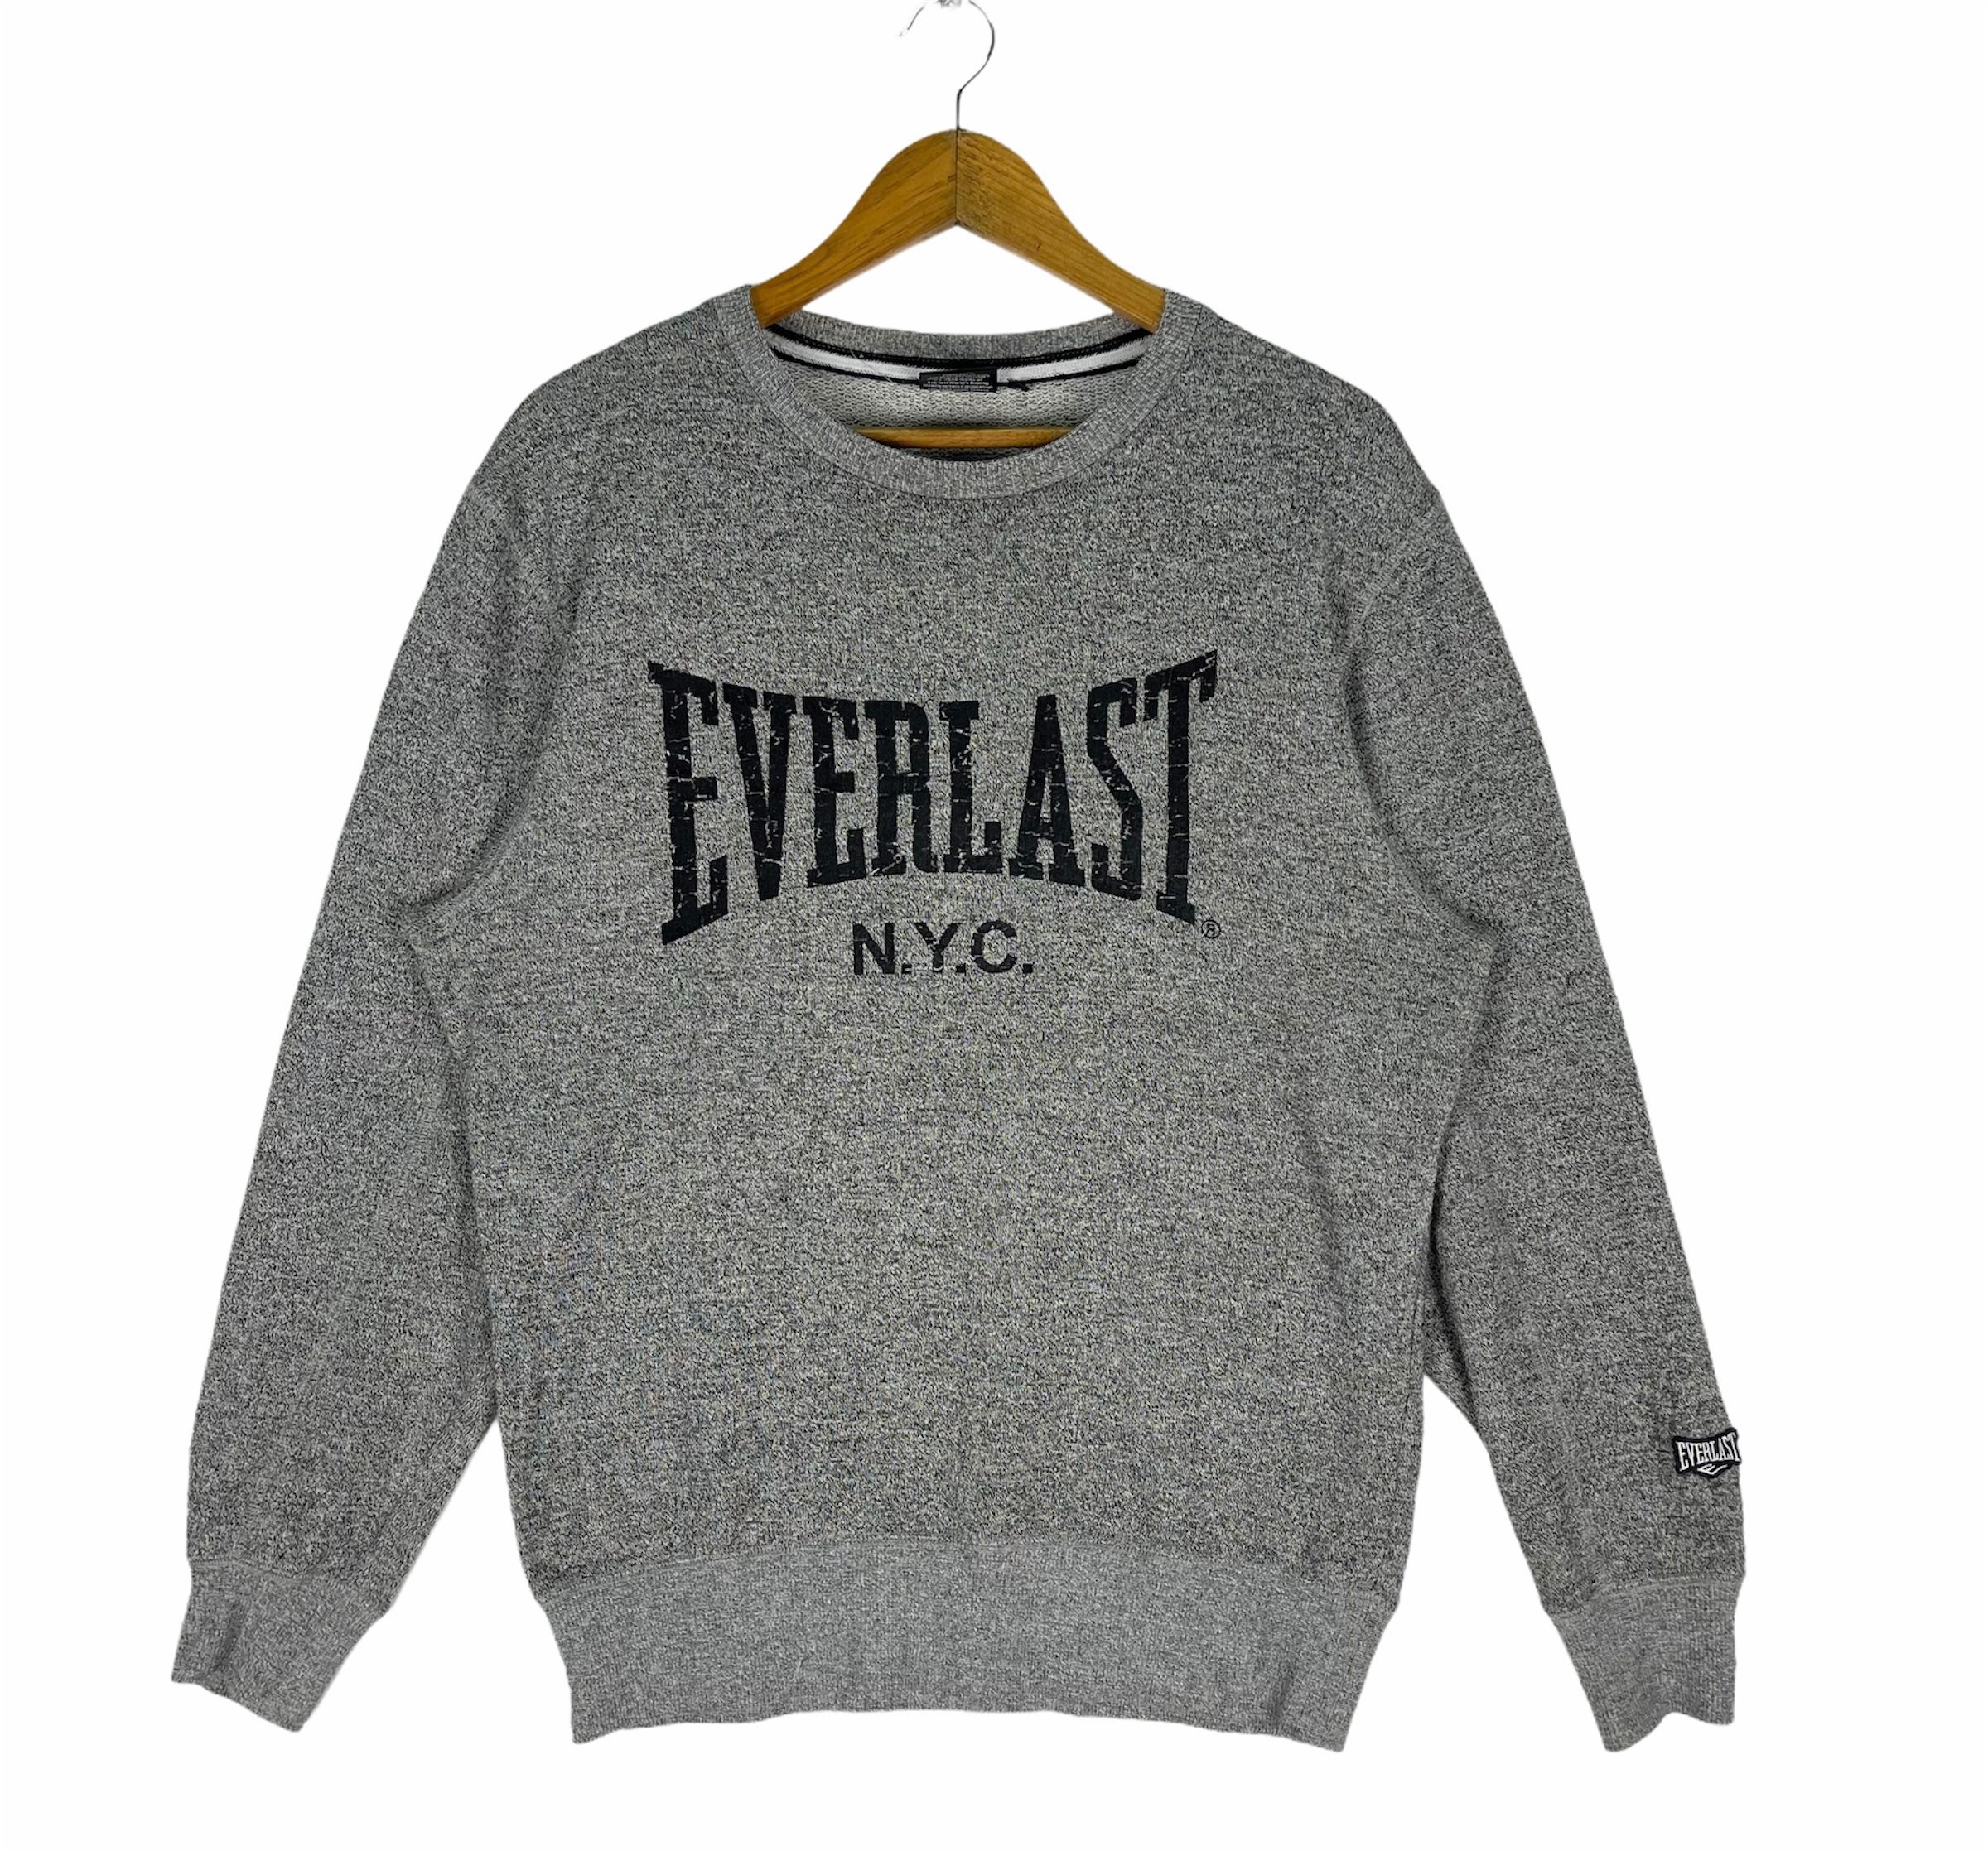 Buy Everlast Clothing Online In India -  India